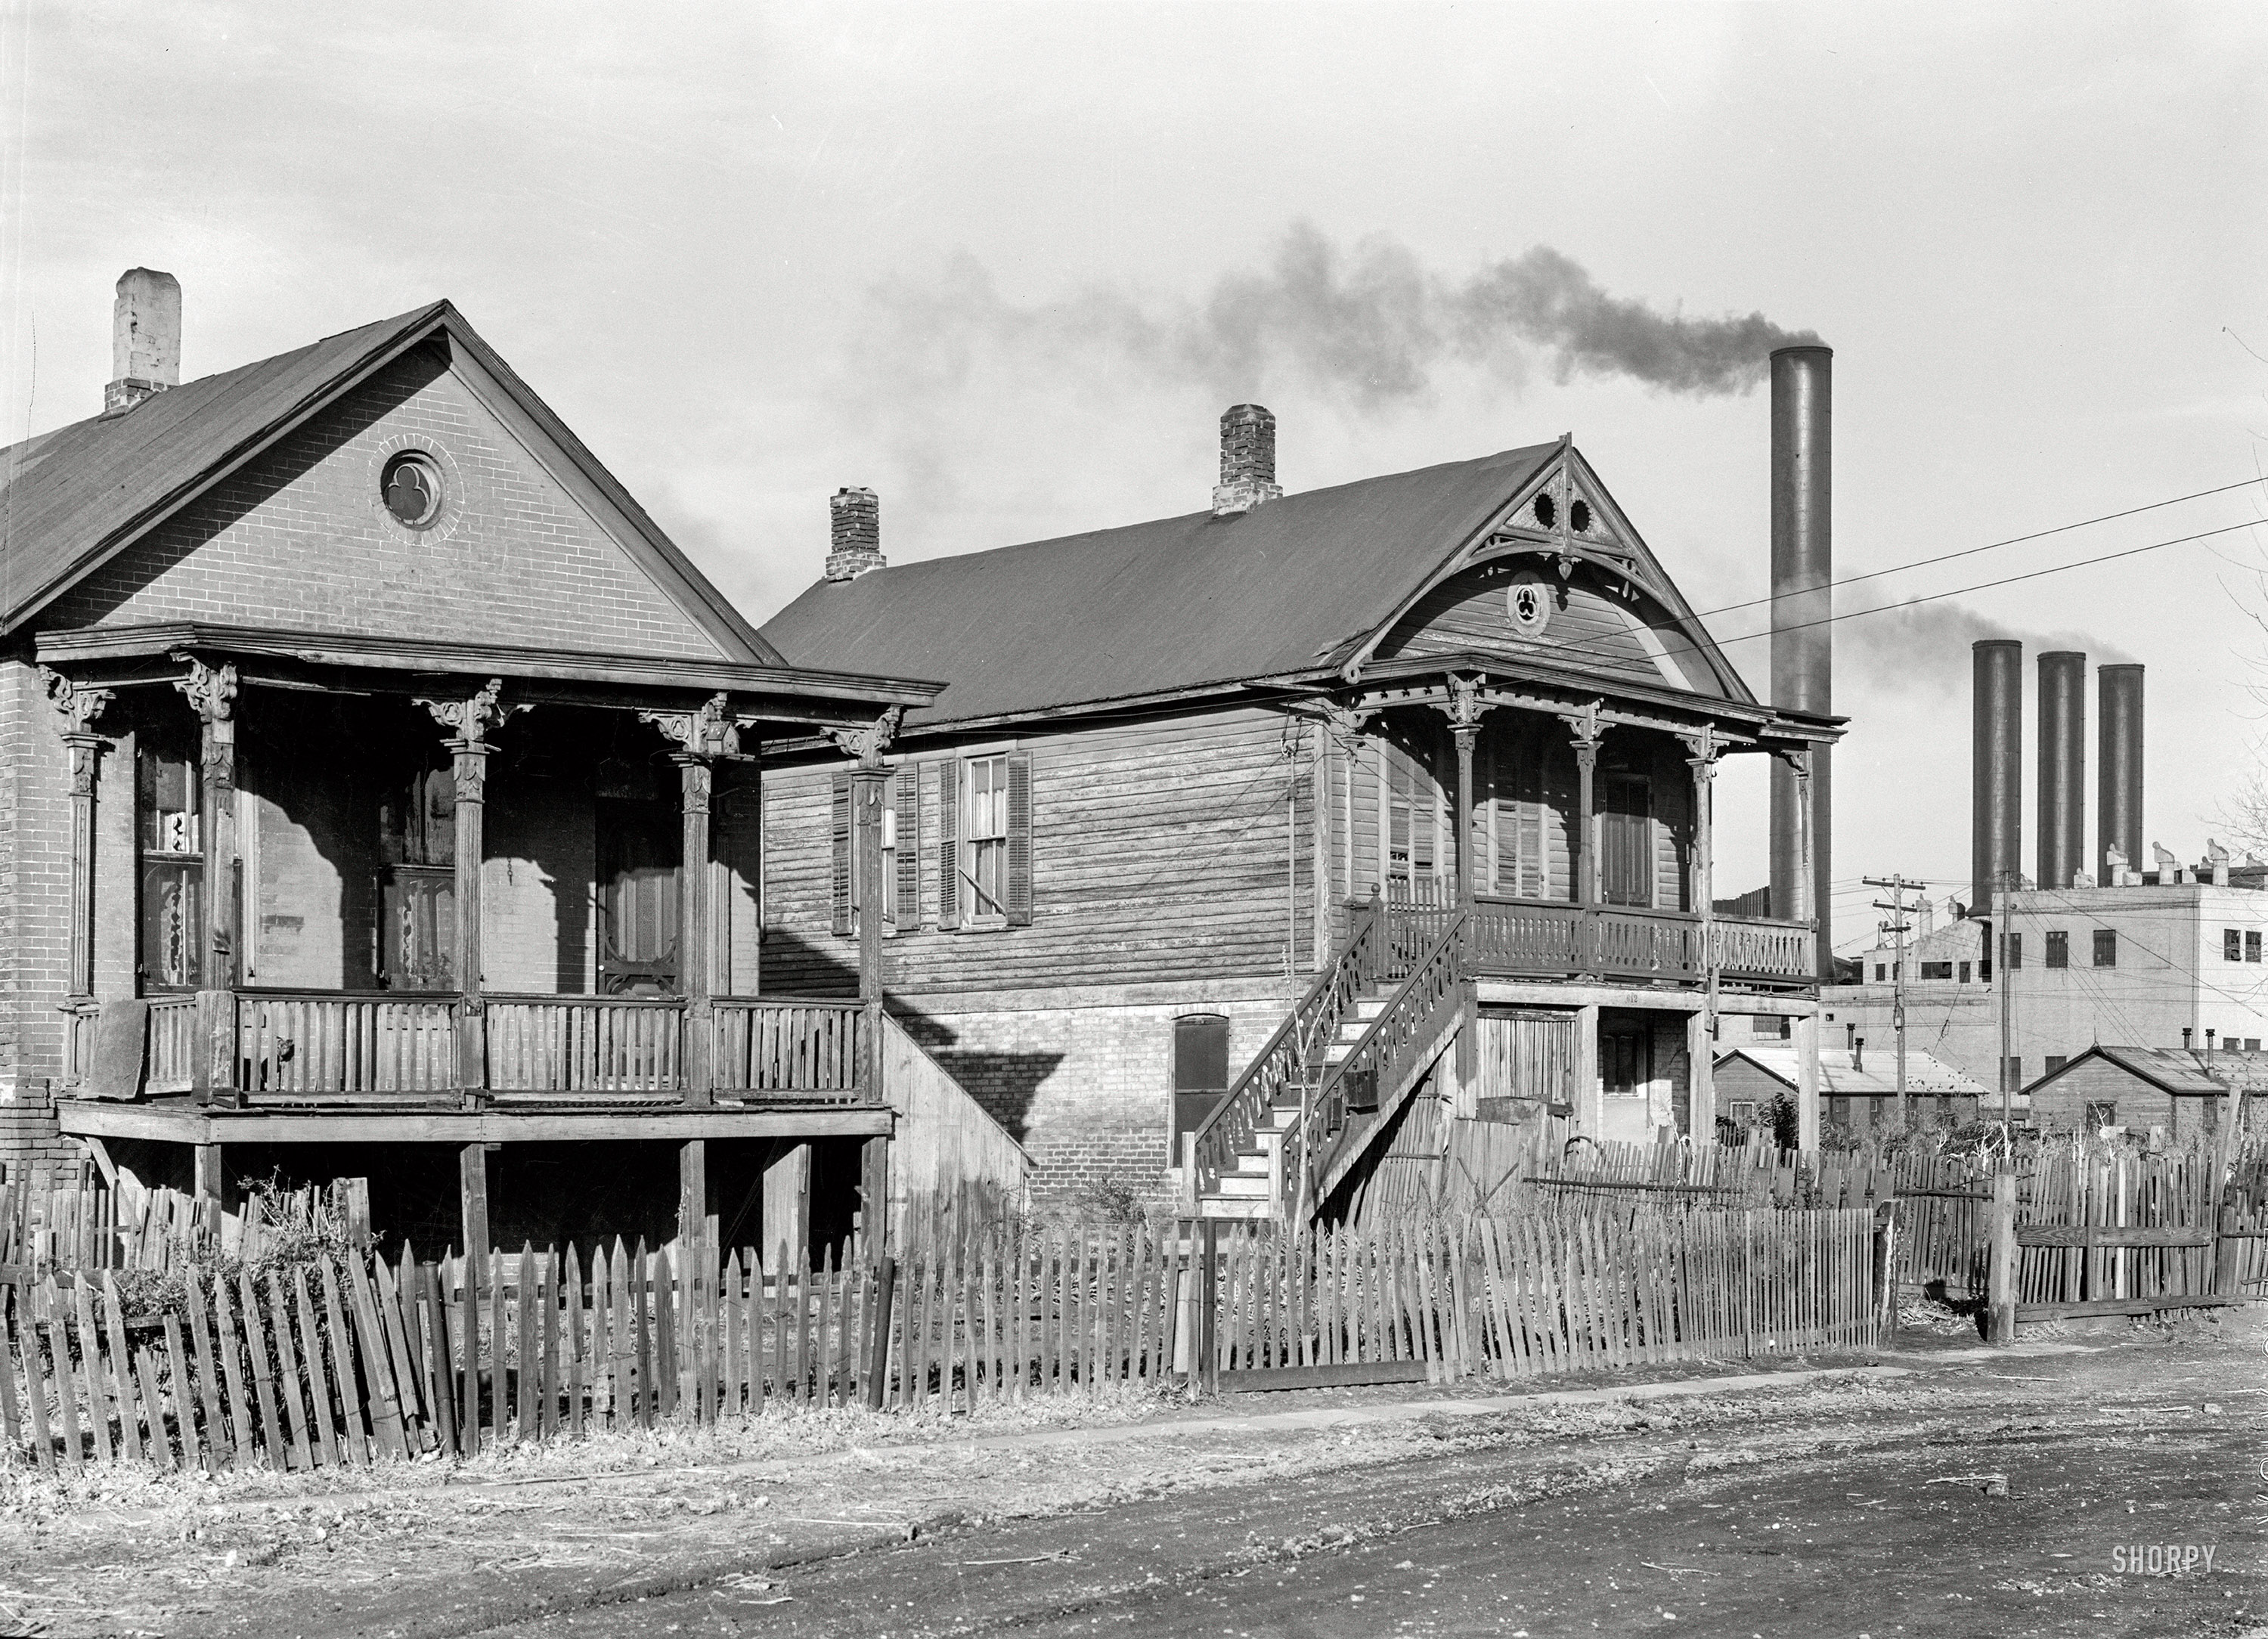 November 1938. "Houses near the Nebraska Power Company plant, Omaha." Photo by John Vachon for the Resettlement Administration. View full size.